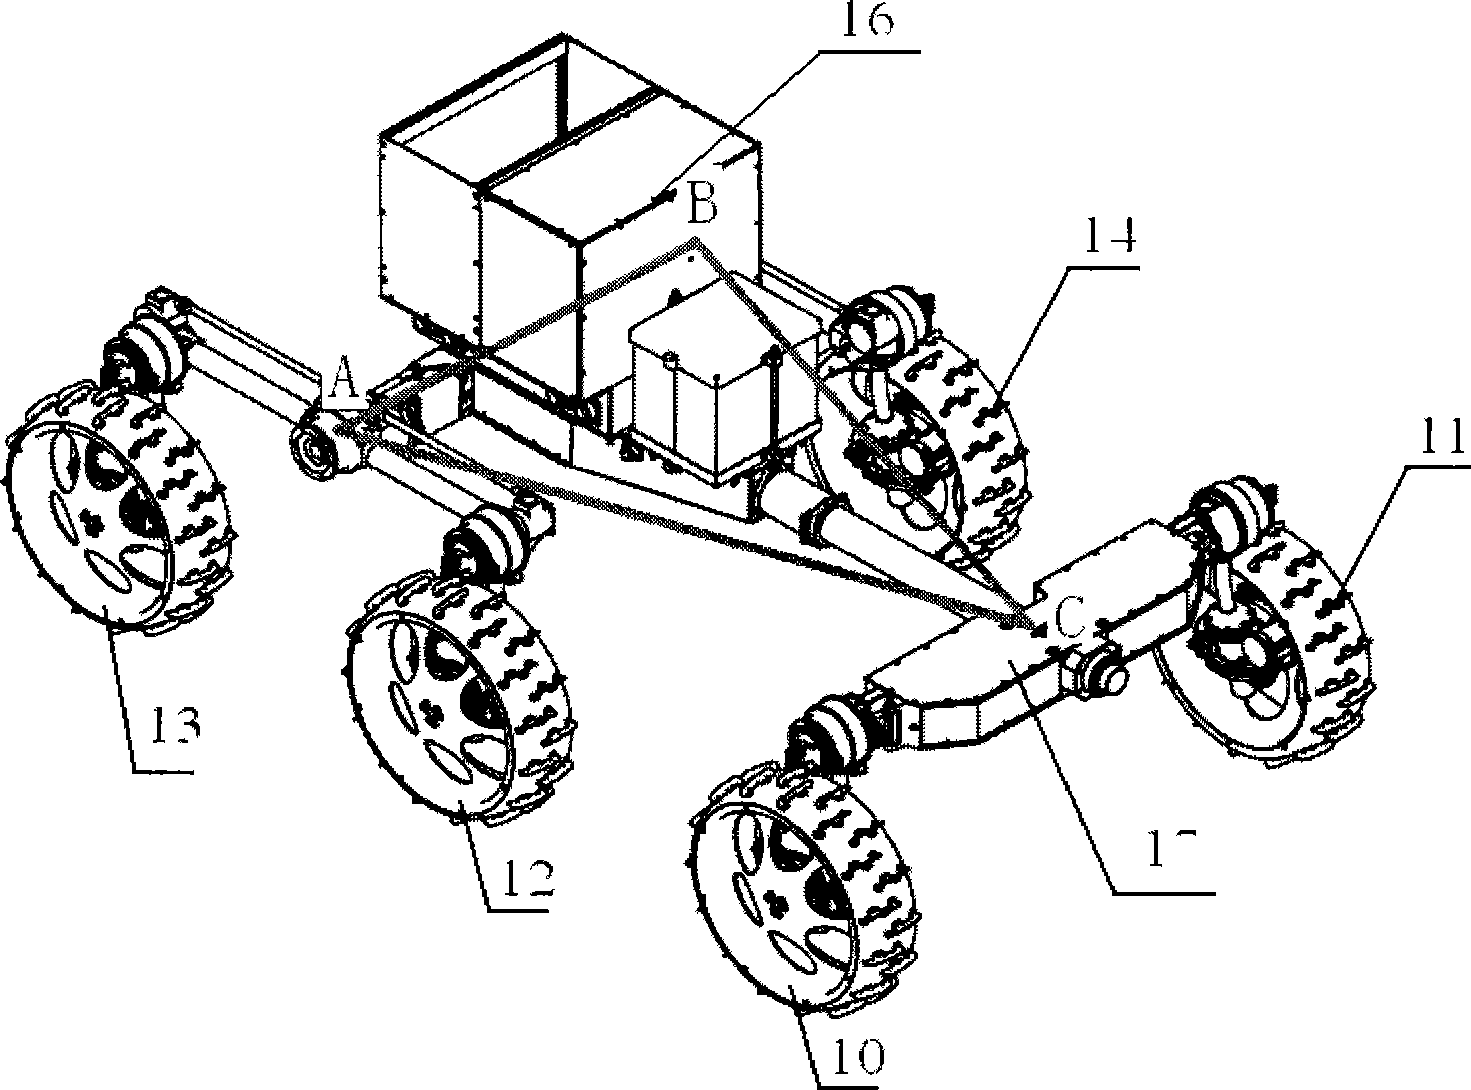 Six-wheel running system for interplanetary exploration patrol vehicle